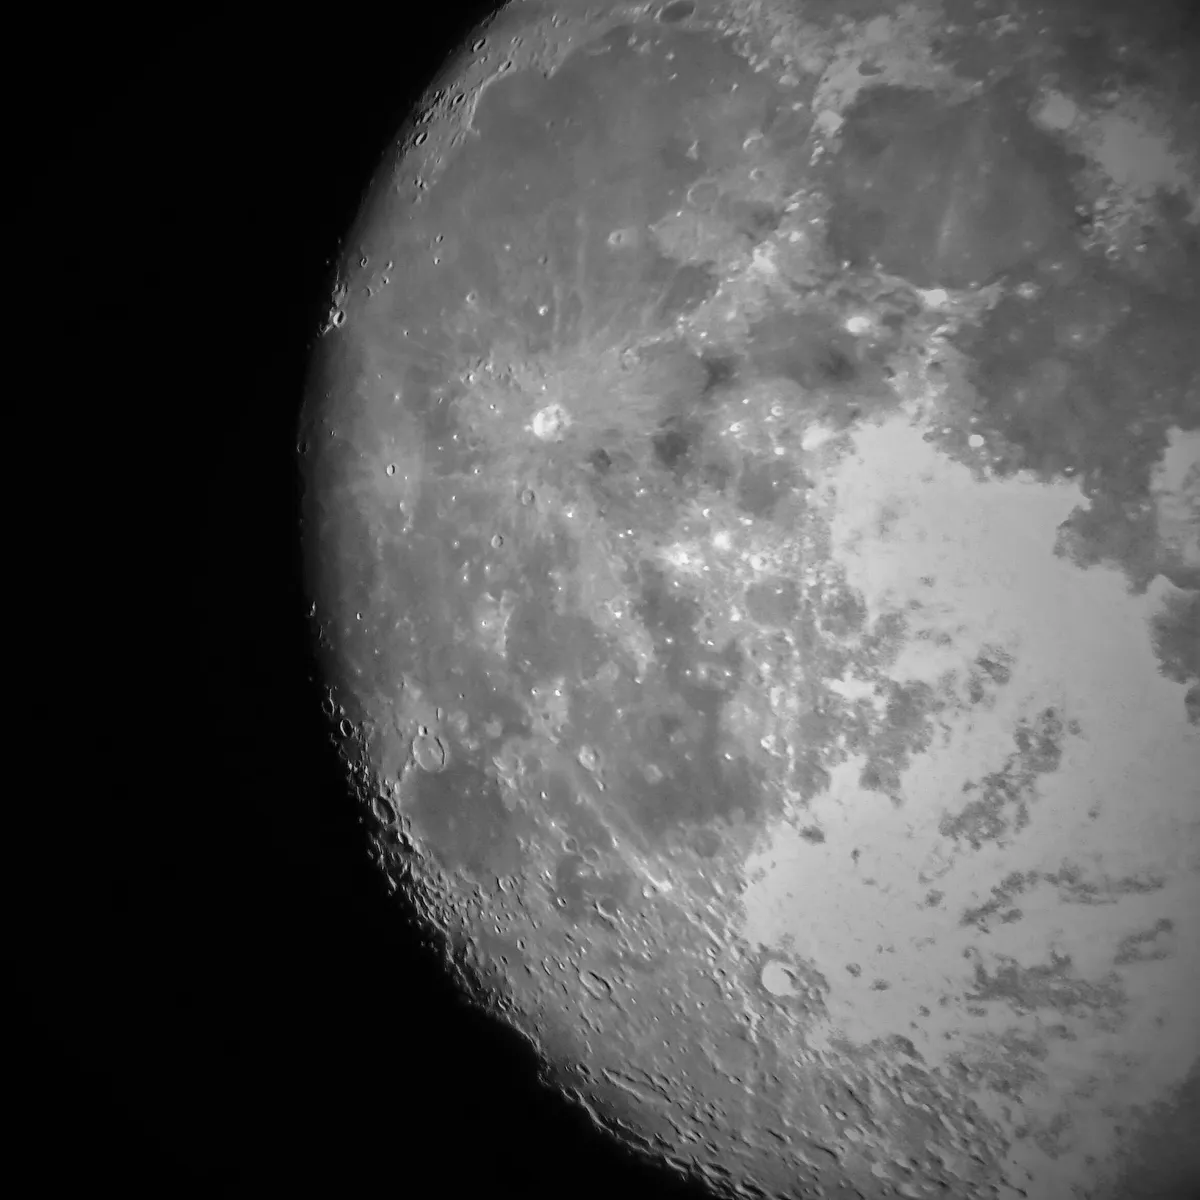 Our Battered Moon by Thomas Lewis, Newport, Wales, UK. Equipment: Celestron 76EQ, 15mm Keller lens, 2x Power lens, Samsung S7 Smartphone.